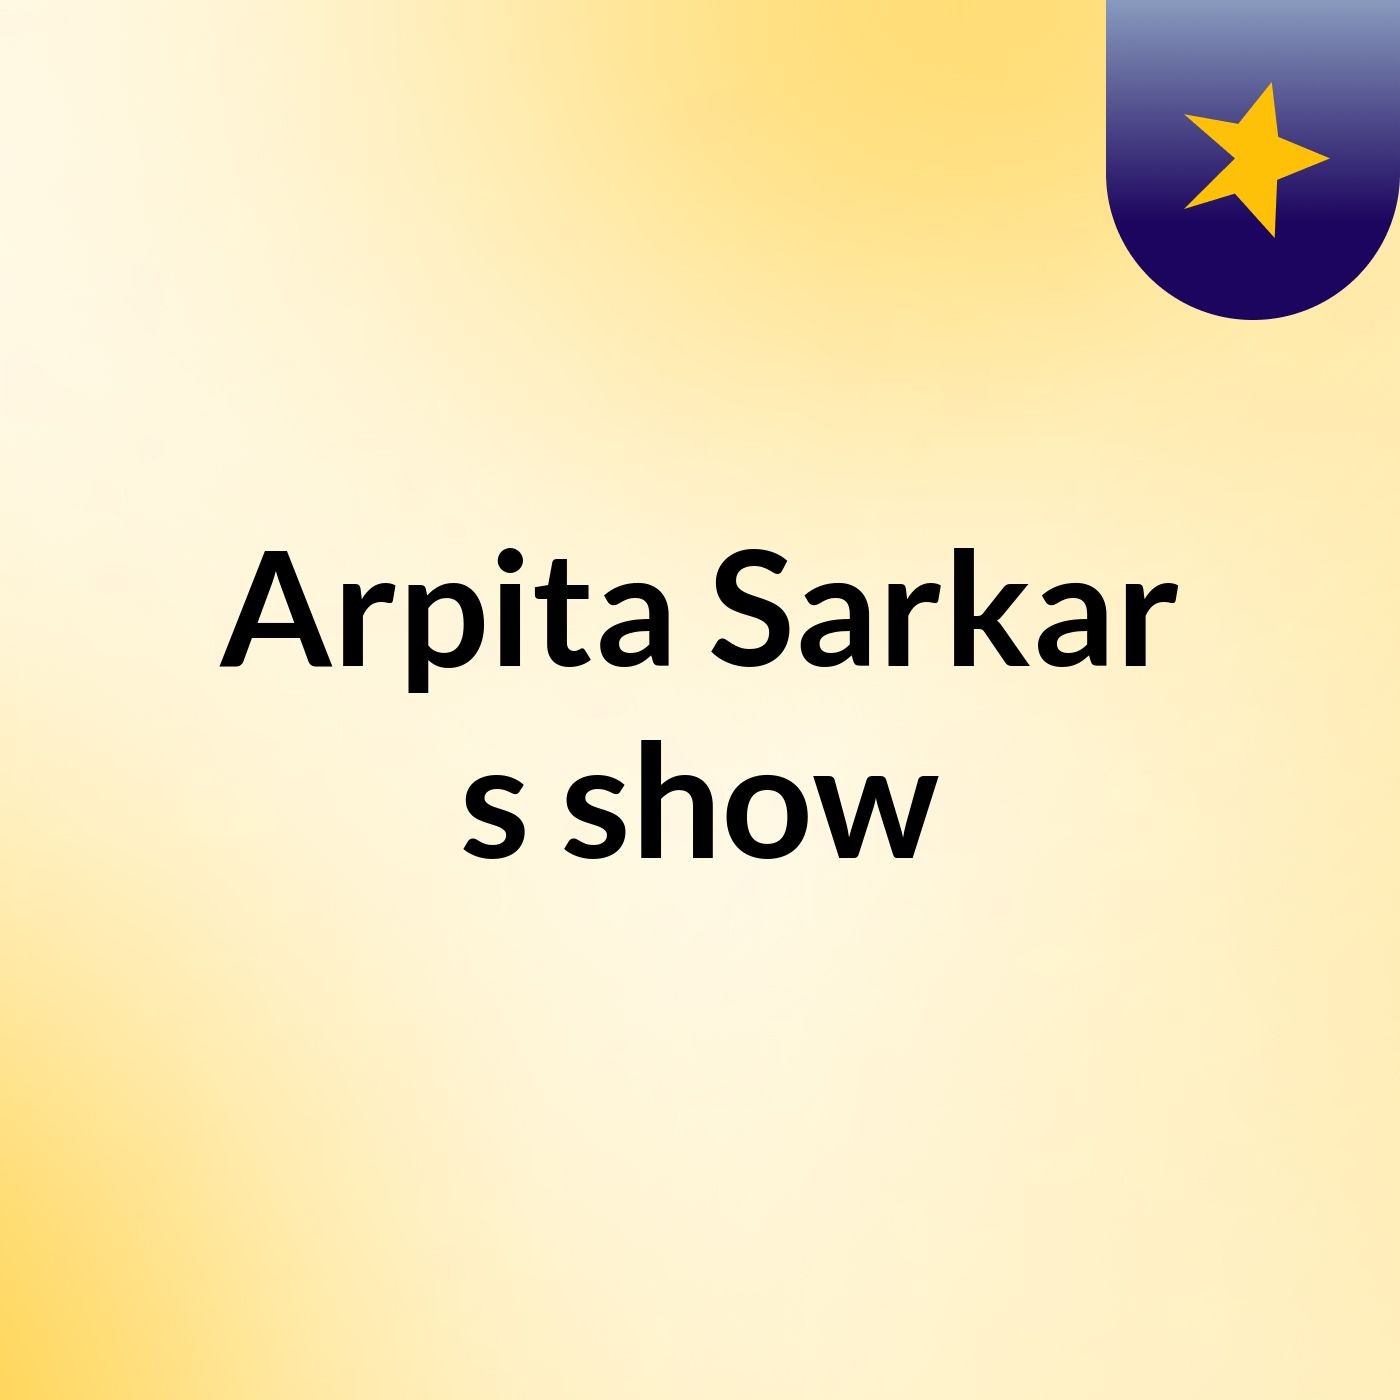 Arpita Sarkar's show